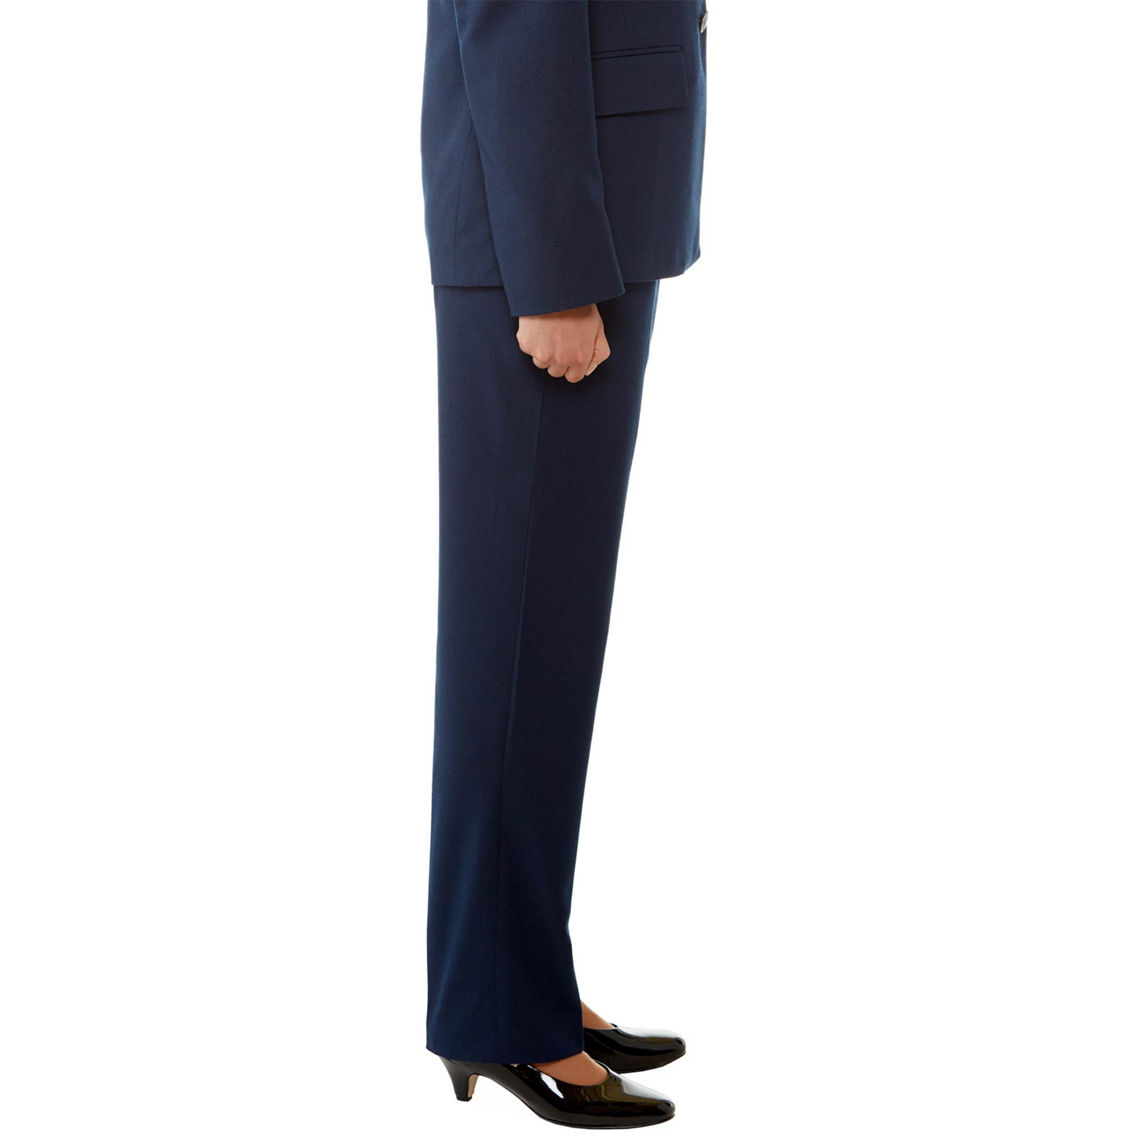 Air Force Service Dress Uniform Slacks Female - Image 3 of 4